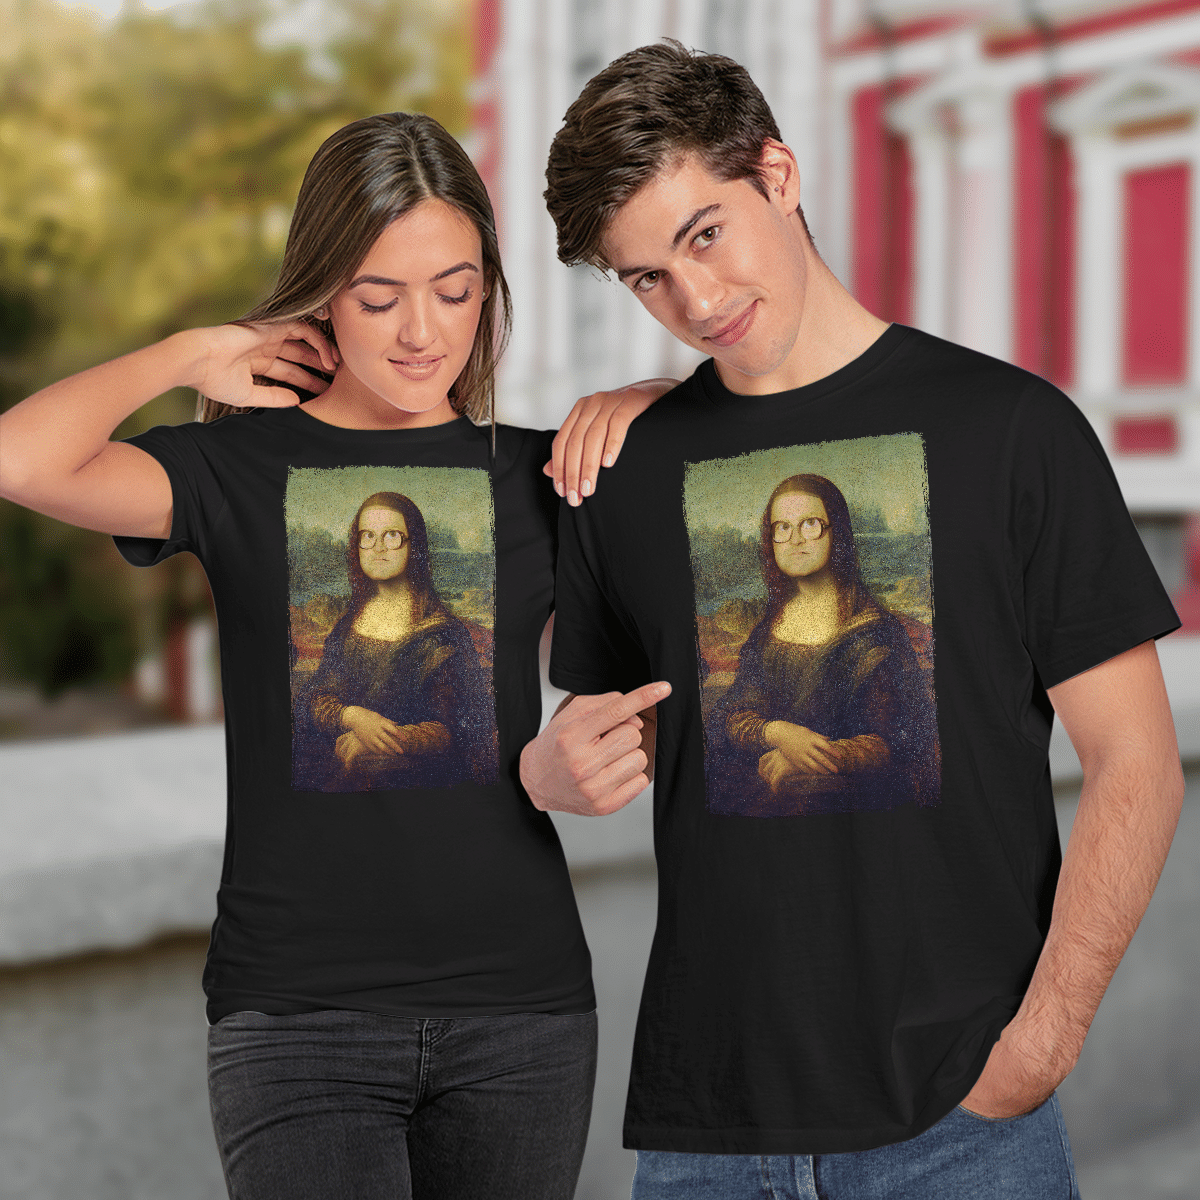 The Bubba Mona Lisa shirt hoodie 8